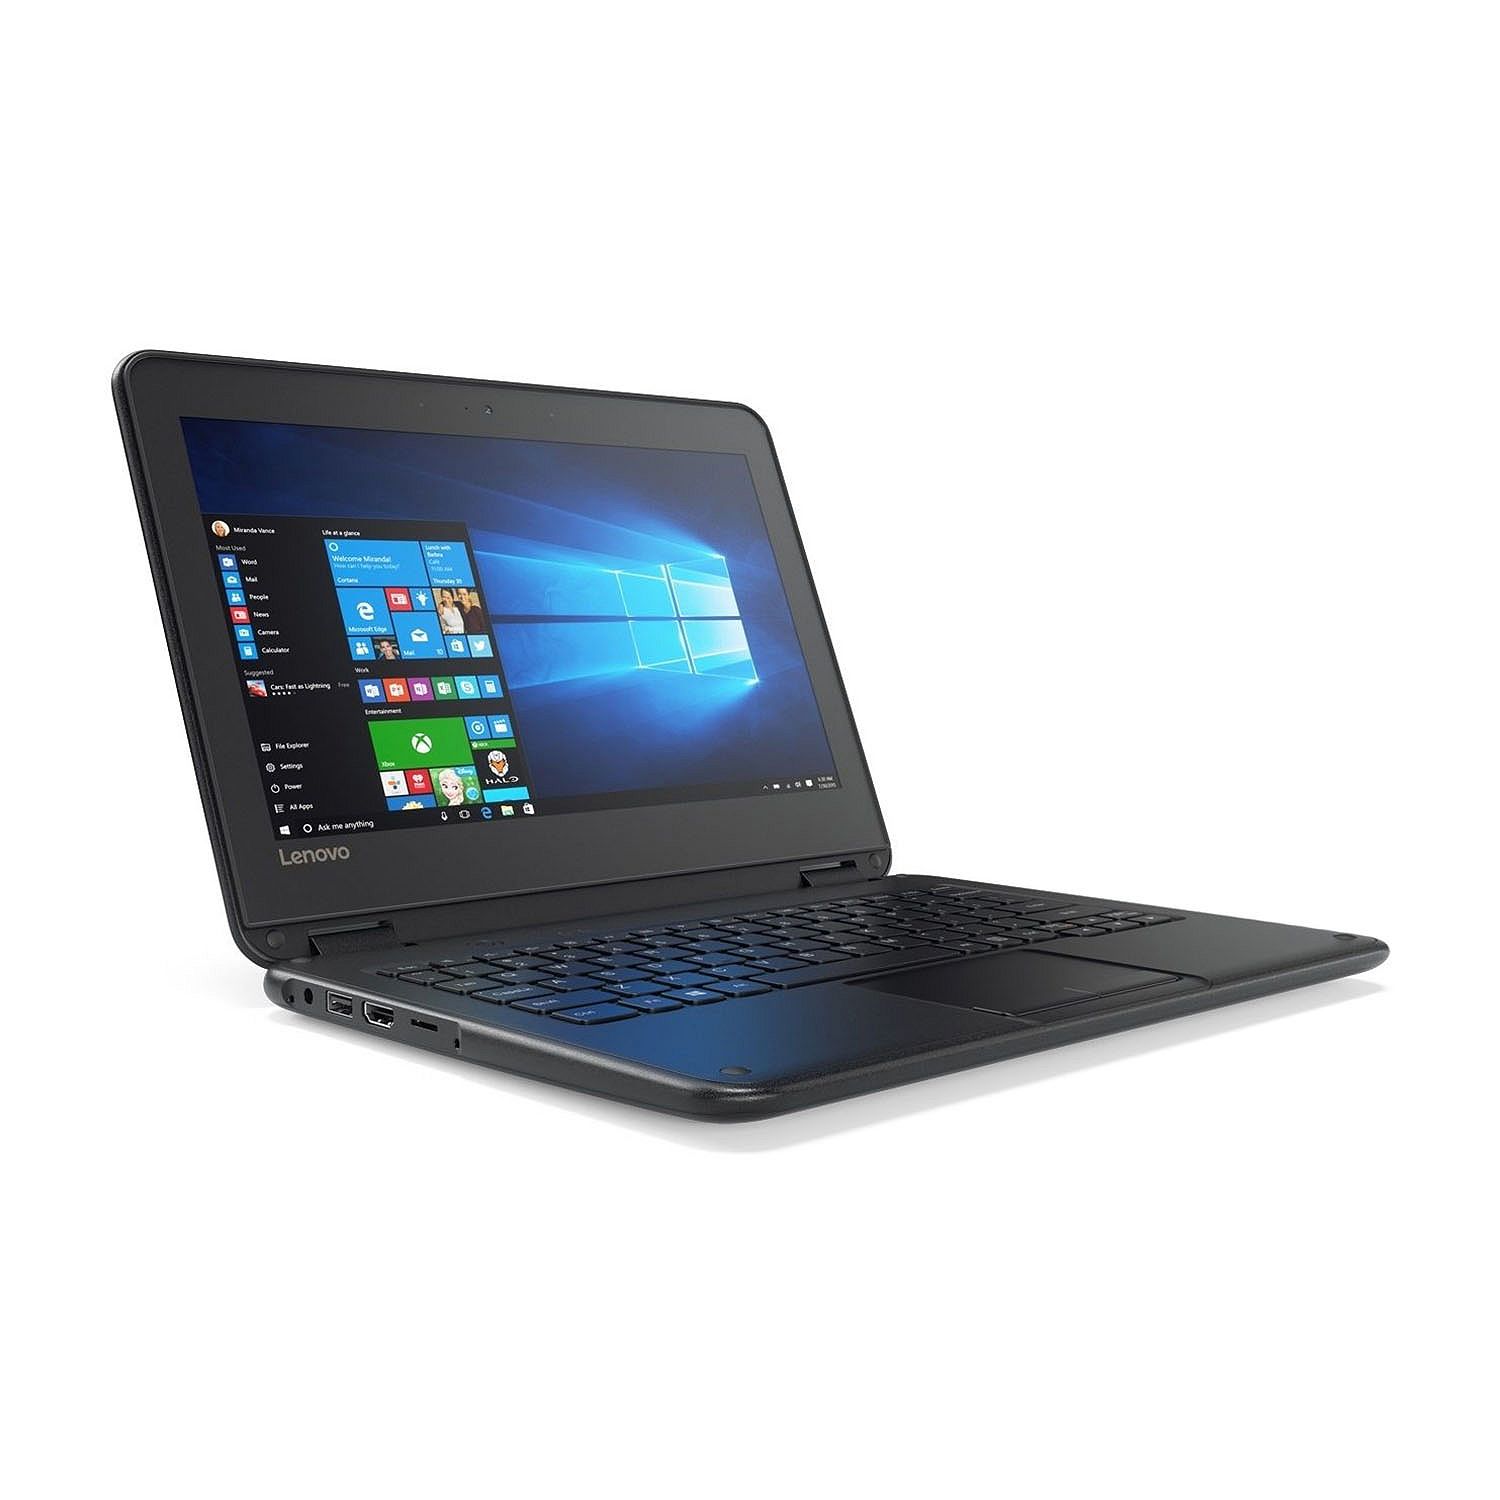 Better than Black Friday! 11.6″ touchscreen Lenovo N32 convertible laptop for $190